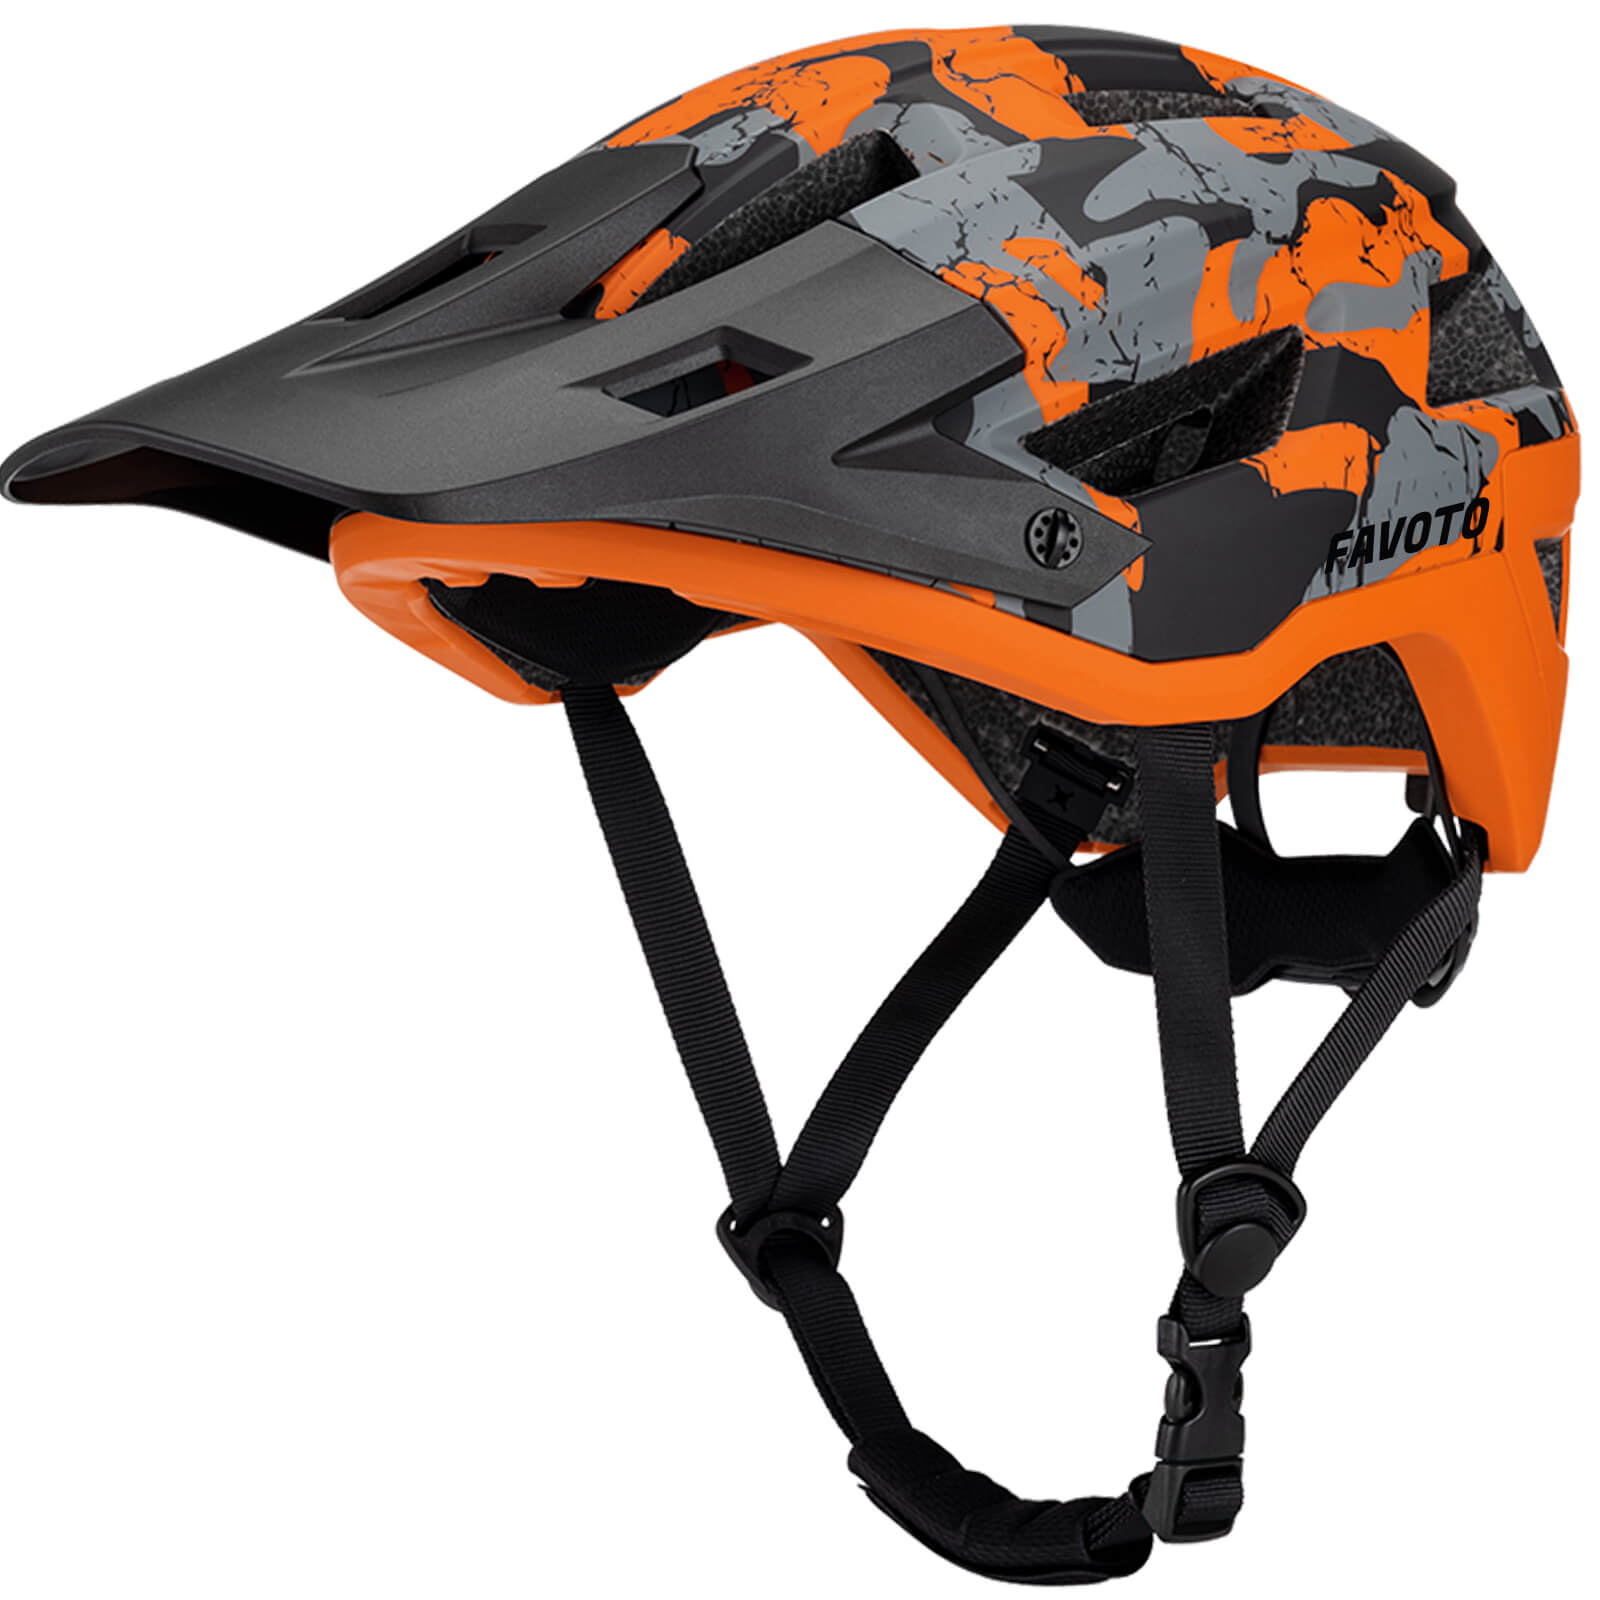 Favoto Mountain Bike Lightweight Helmet